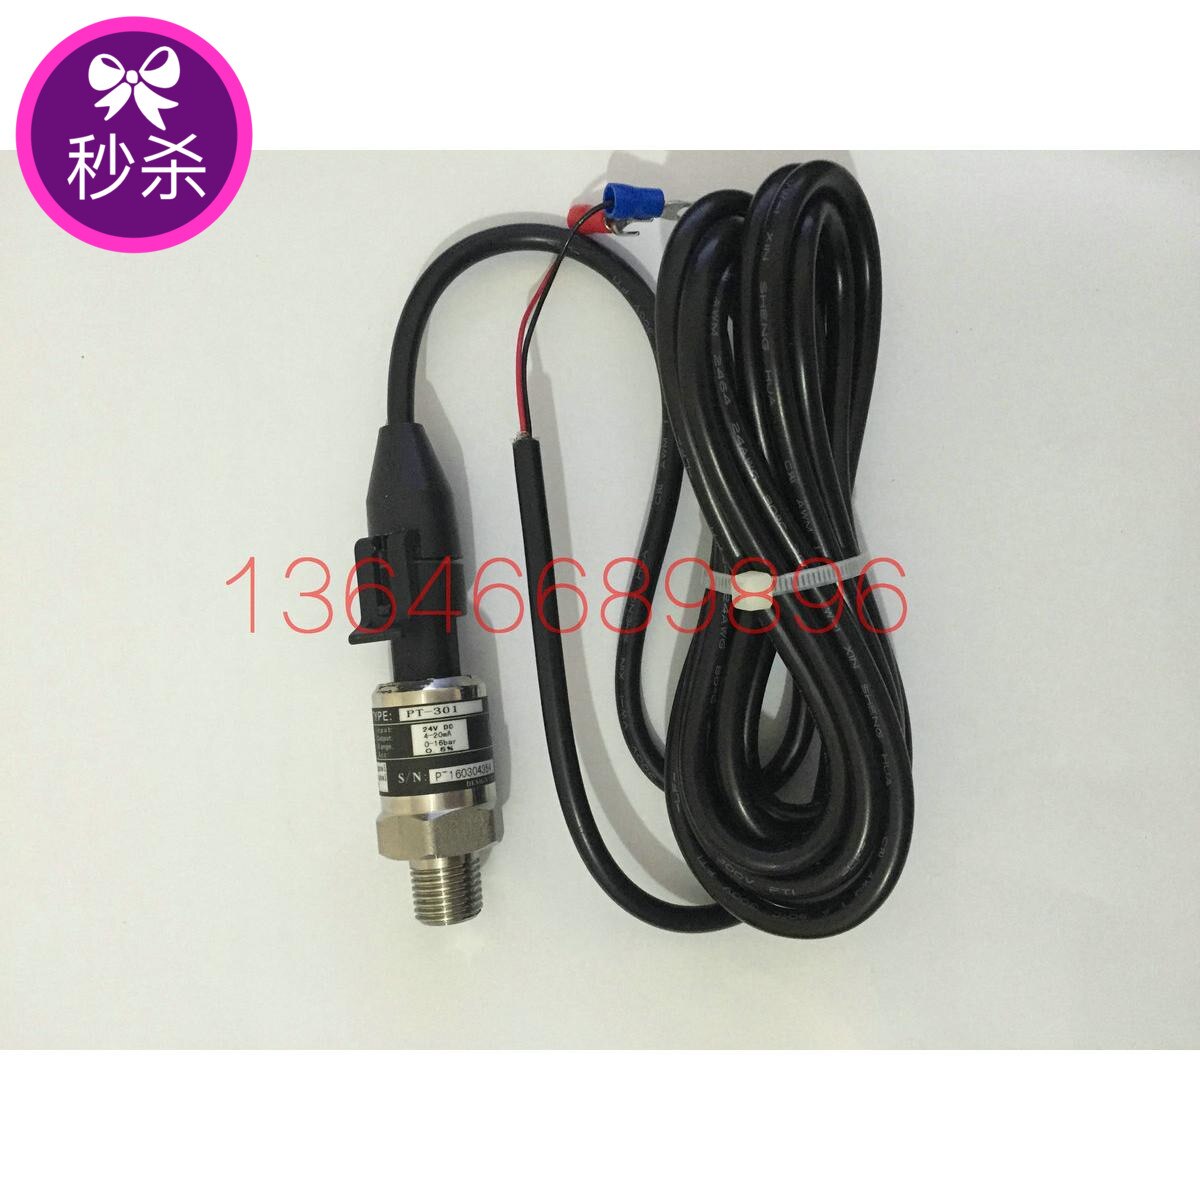 PT-301-16 Pressure Transmitter Air Compressor Pressure Sensor 0-16bar 4-20mA